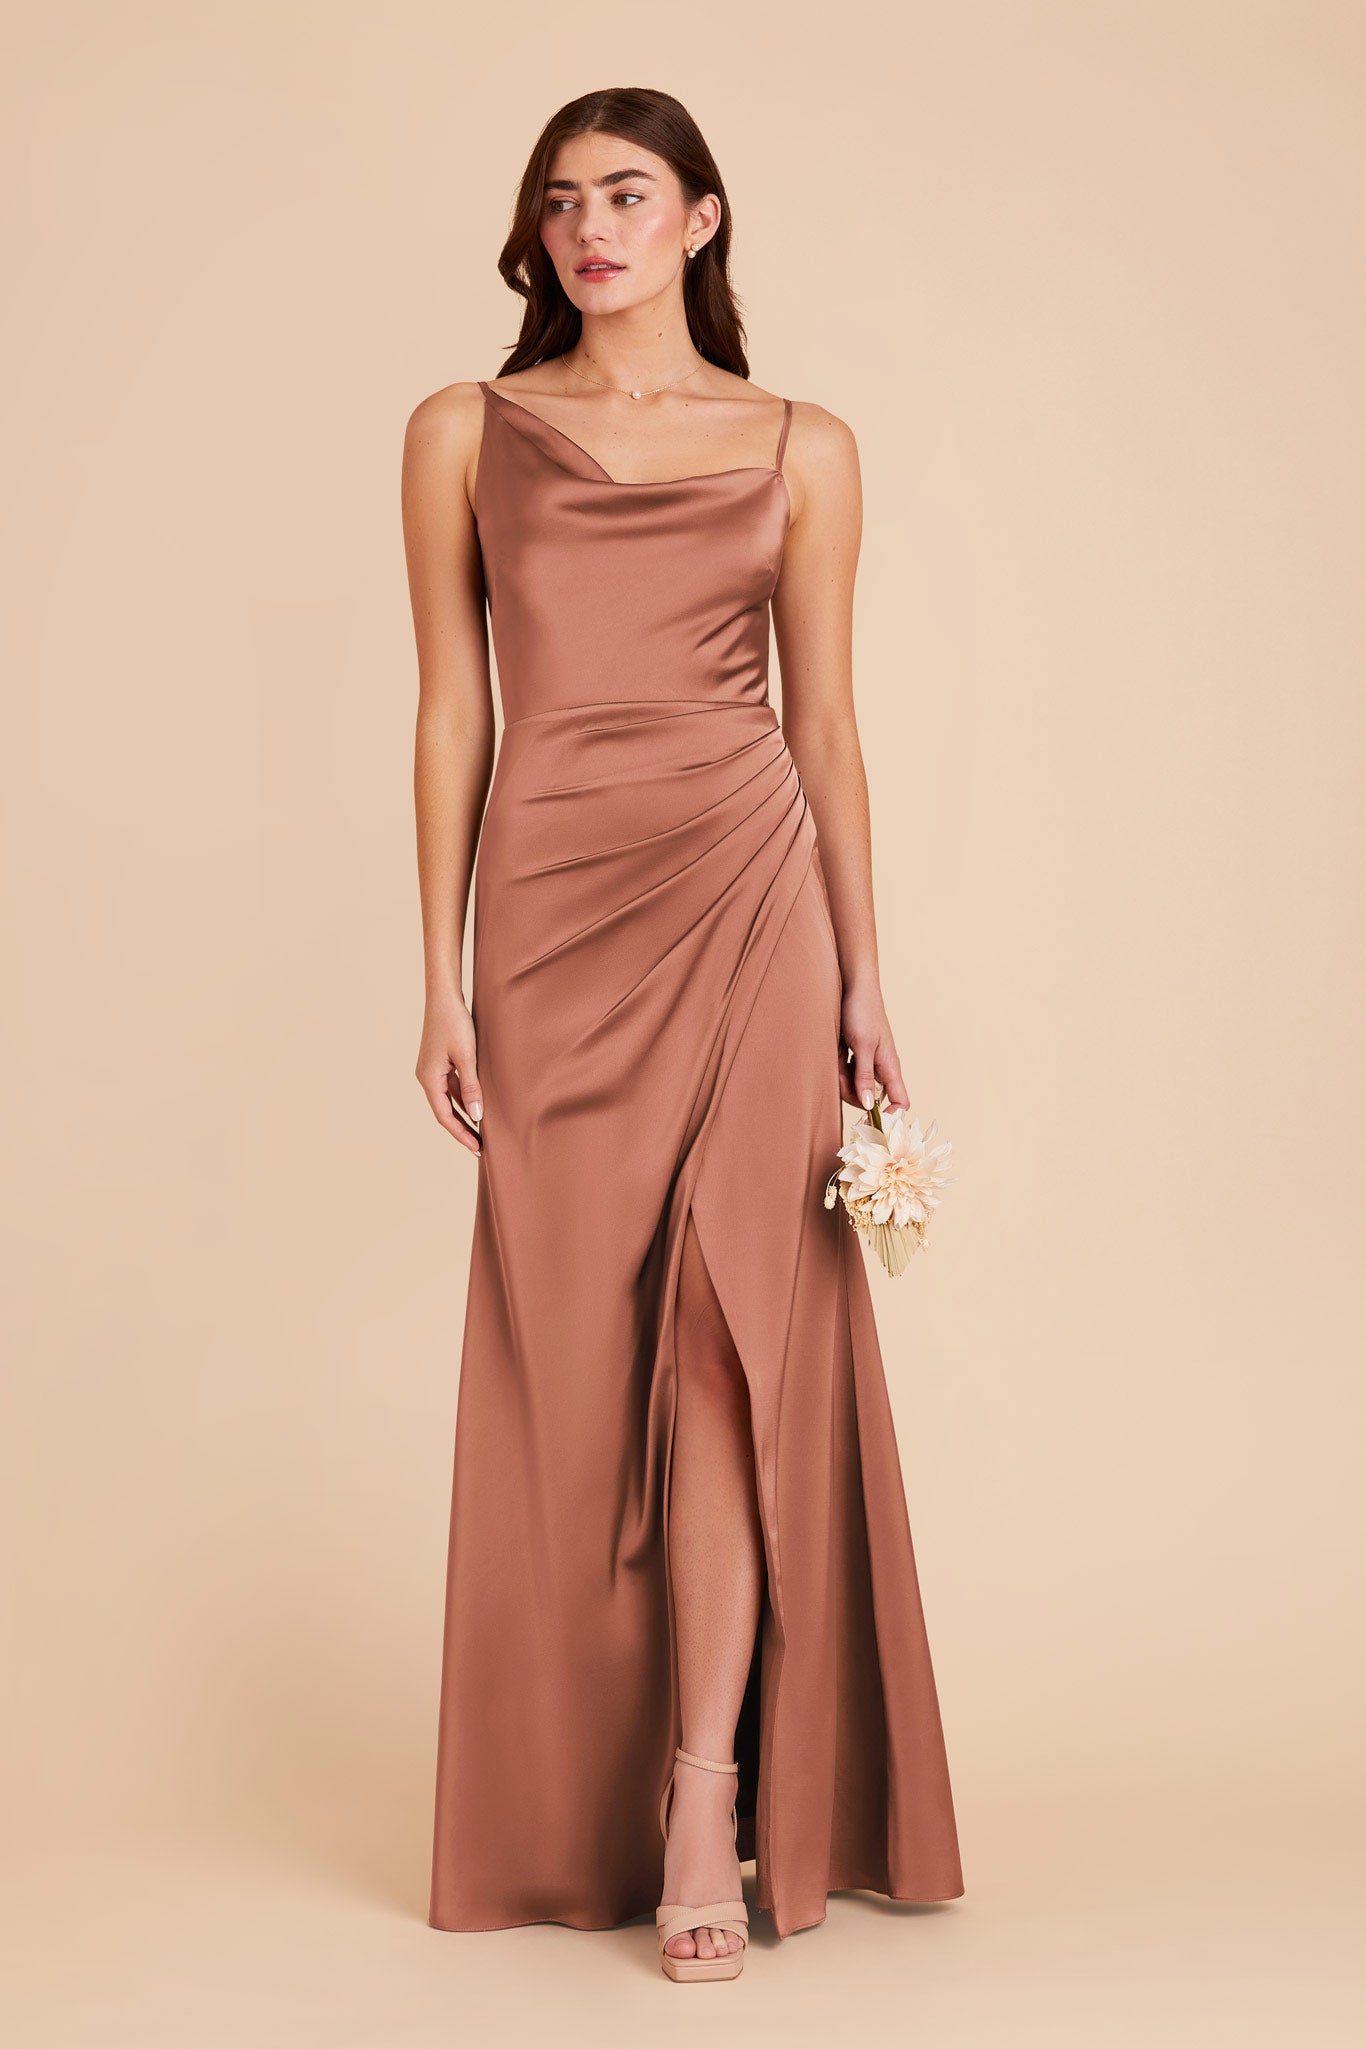 Desert Rose Jennifer Matte Satin Dress by Birdy Grey